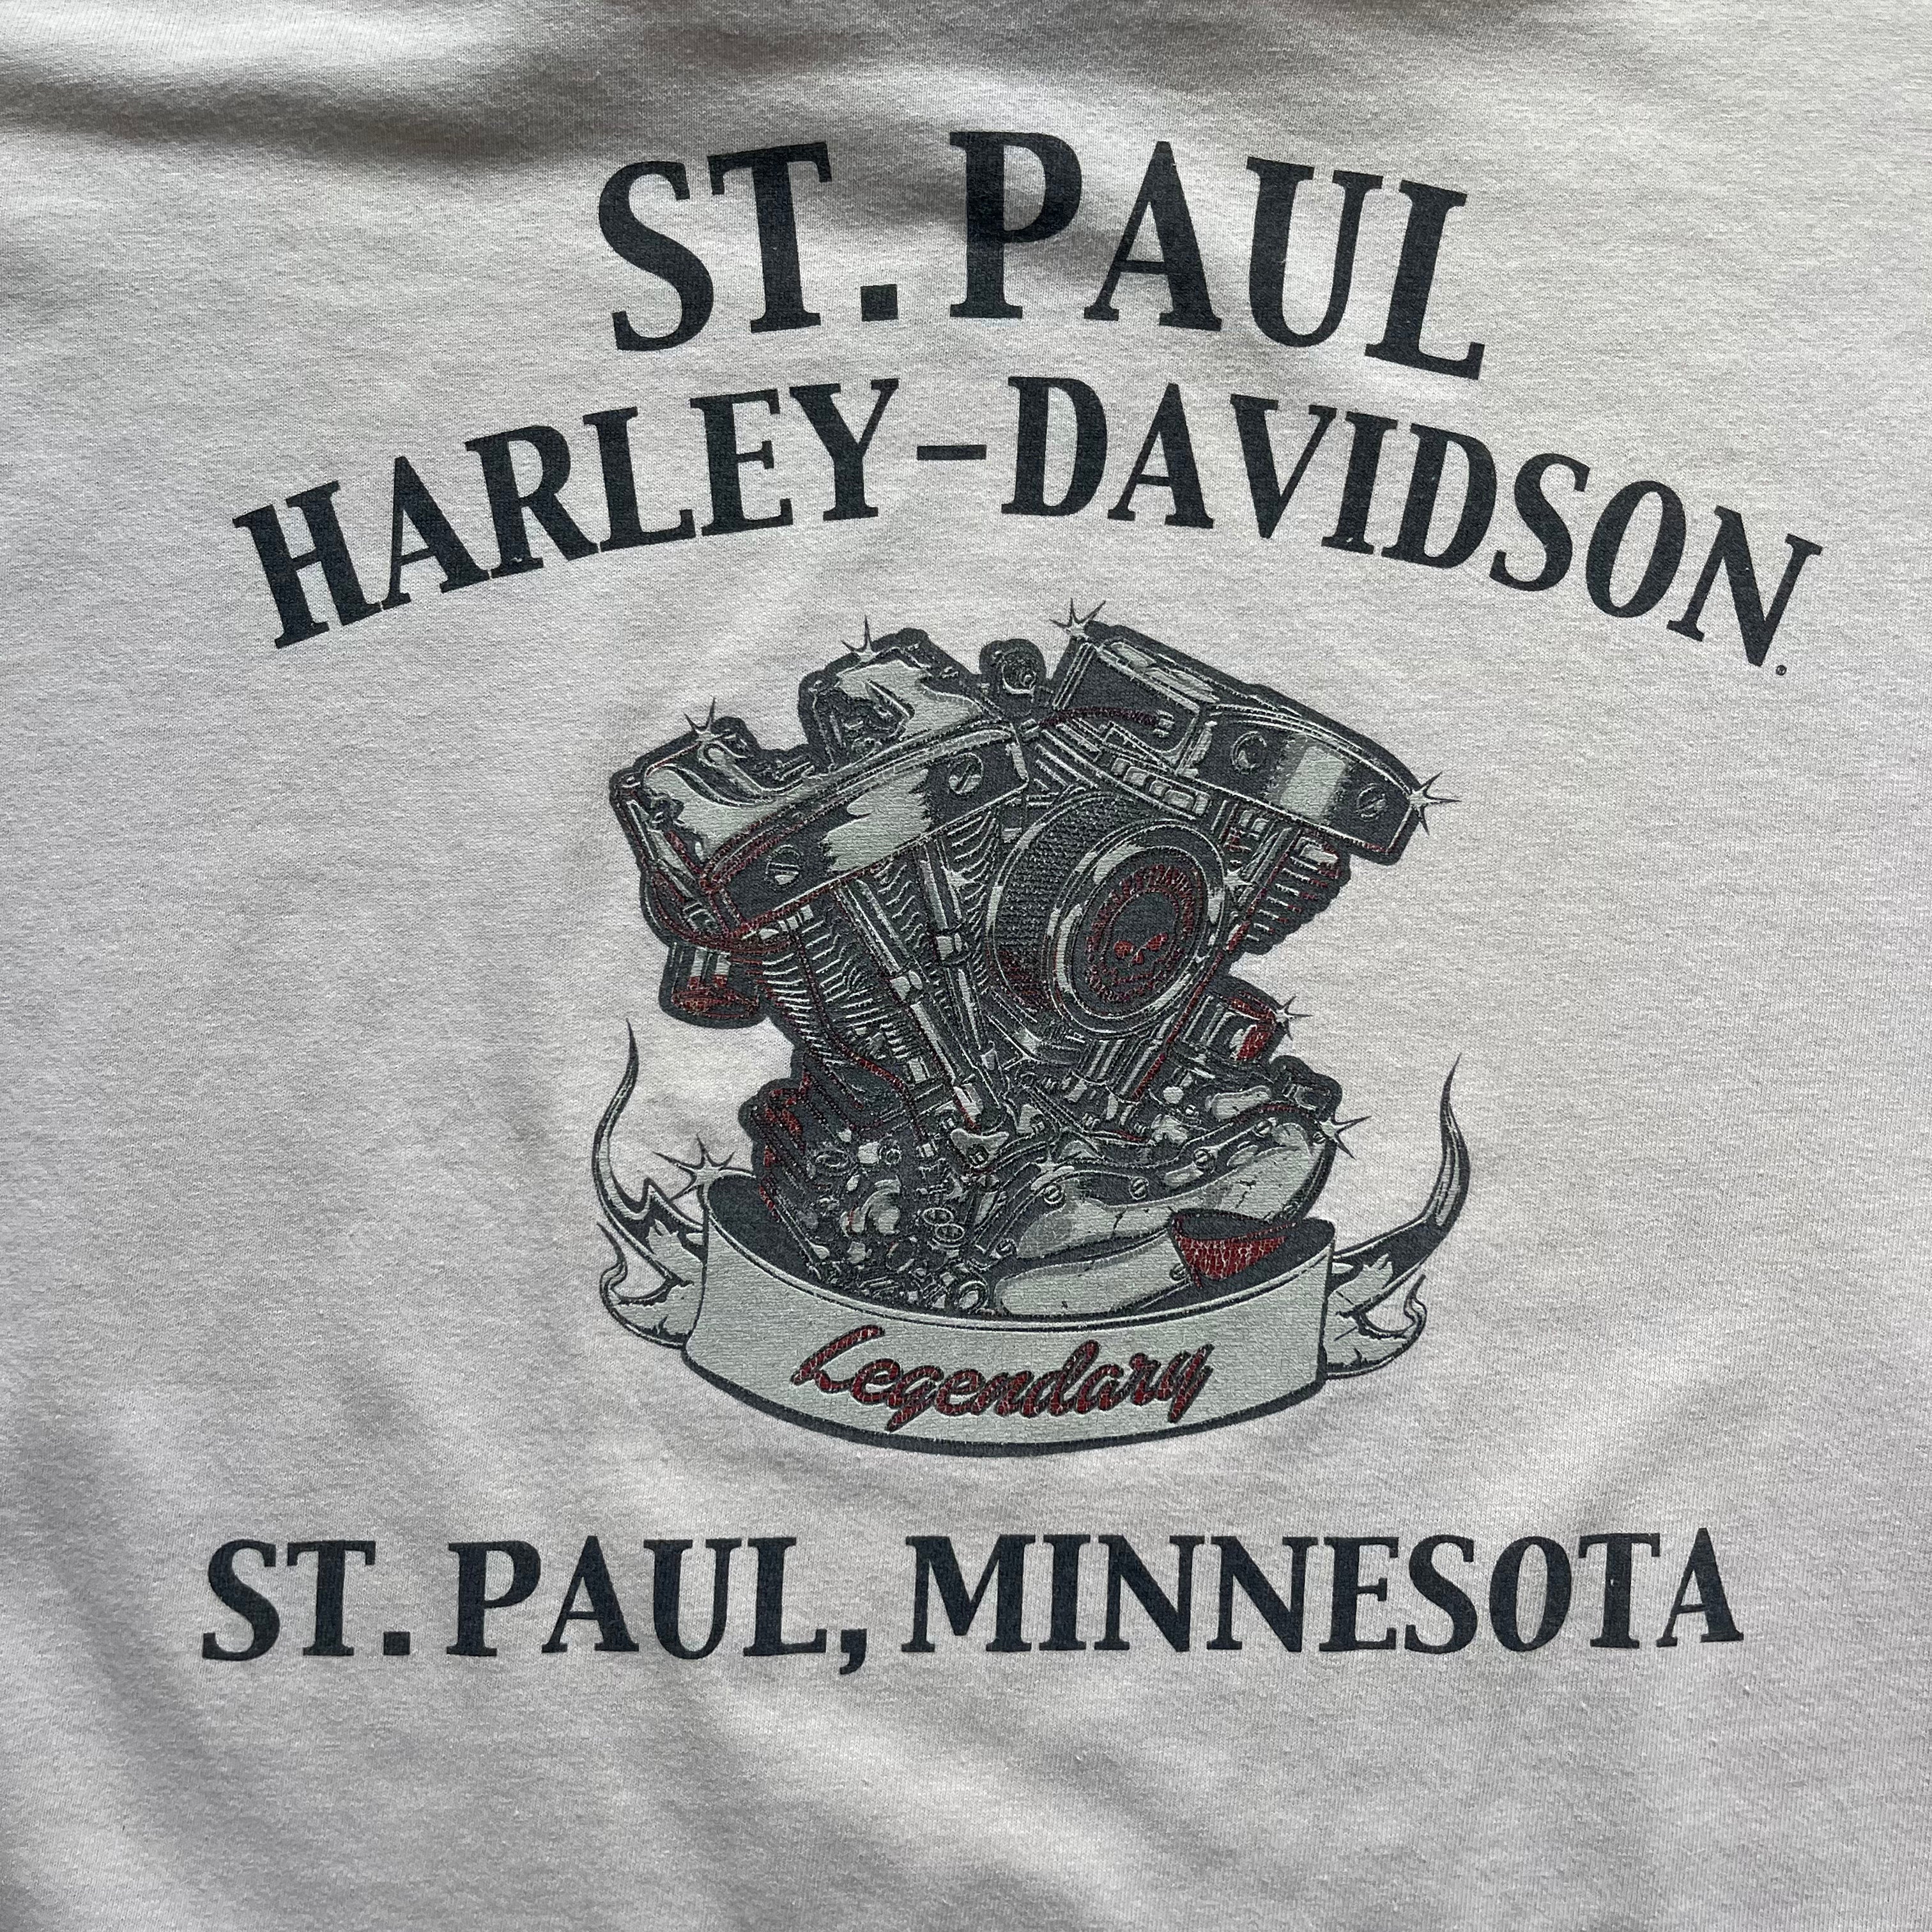 Harley Davidson St Paul, Minnesota